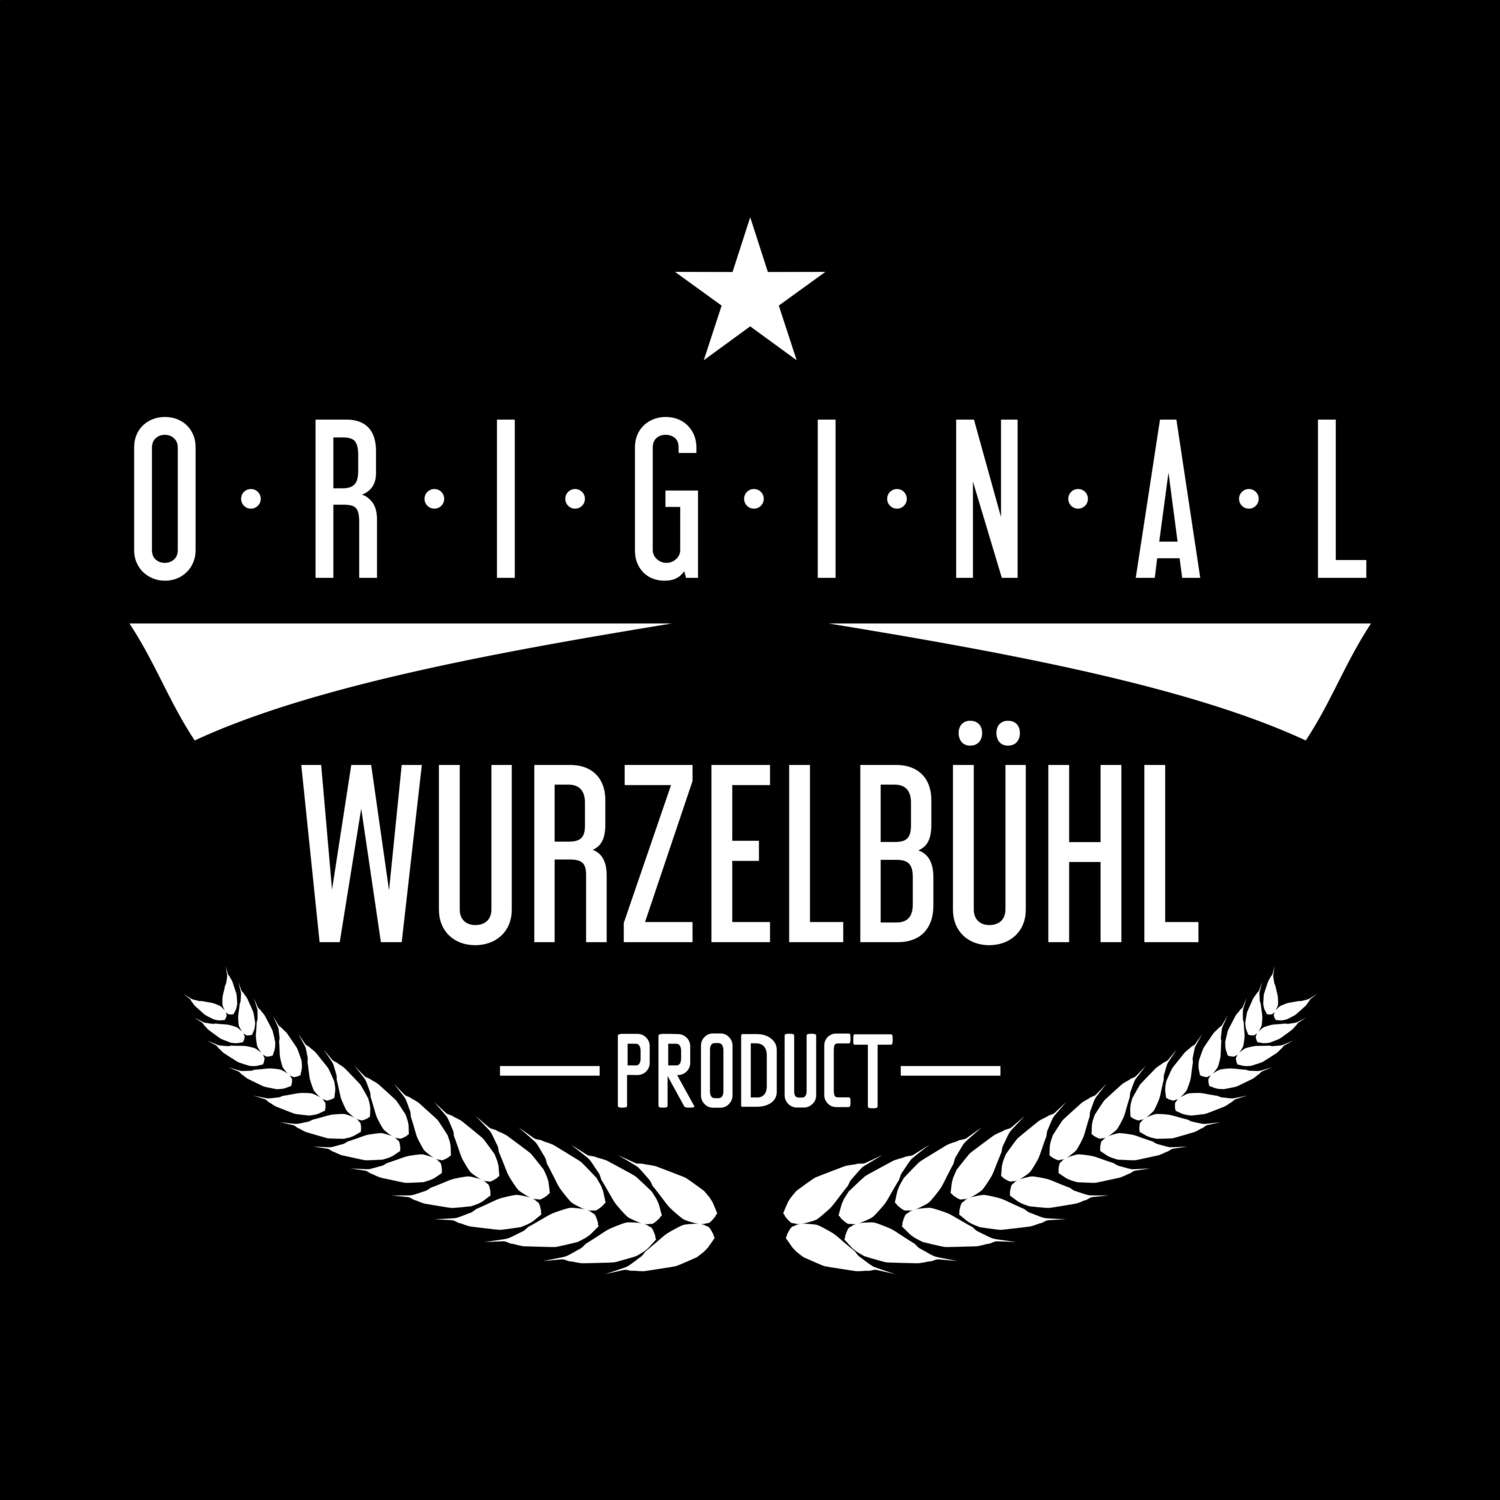 Wurzelbühl T-Shirt »Original Product«